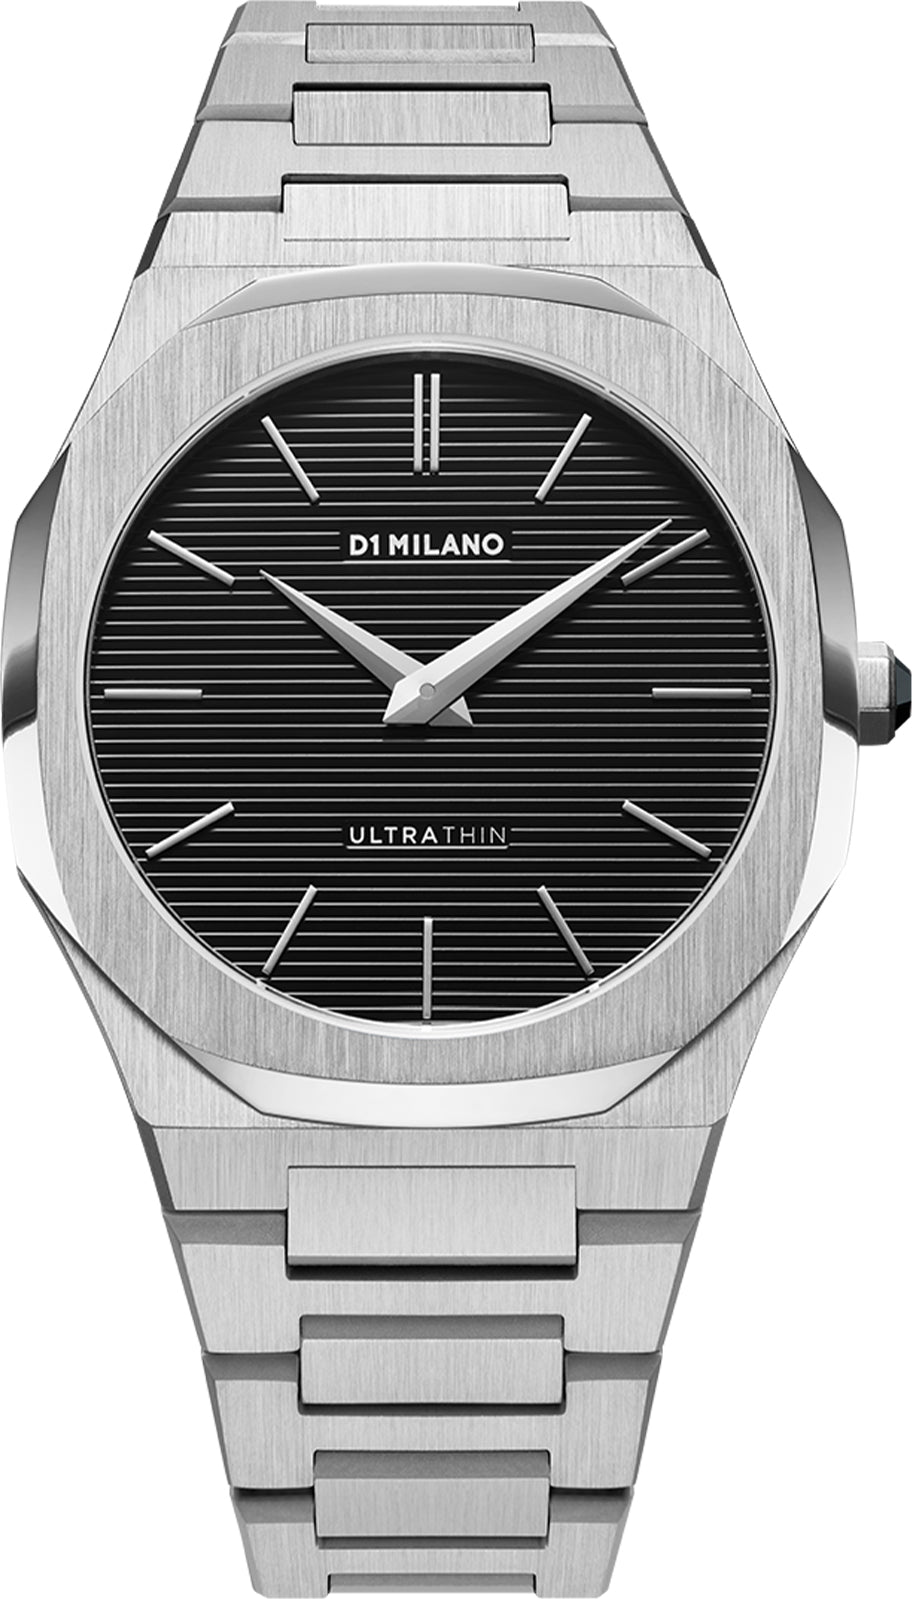 Photos - Wrist Watch D1 Milano Watch Ultra Thin DLM-033 